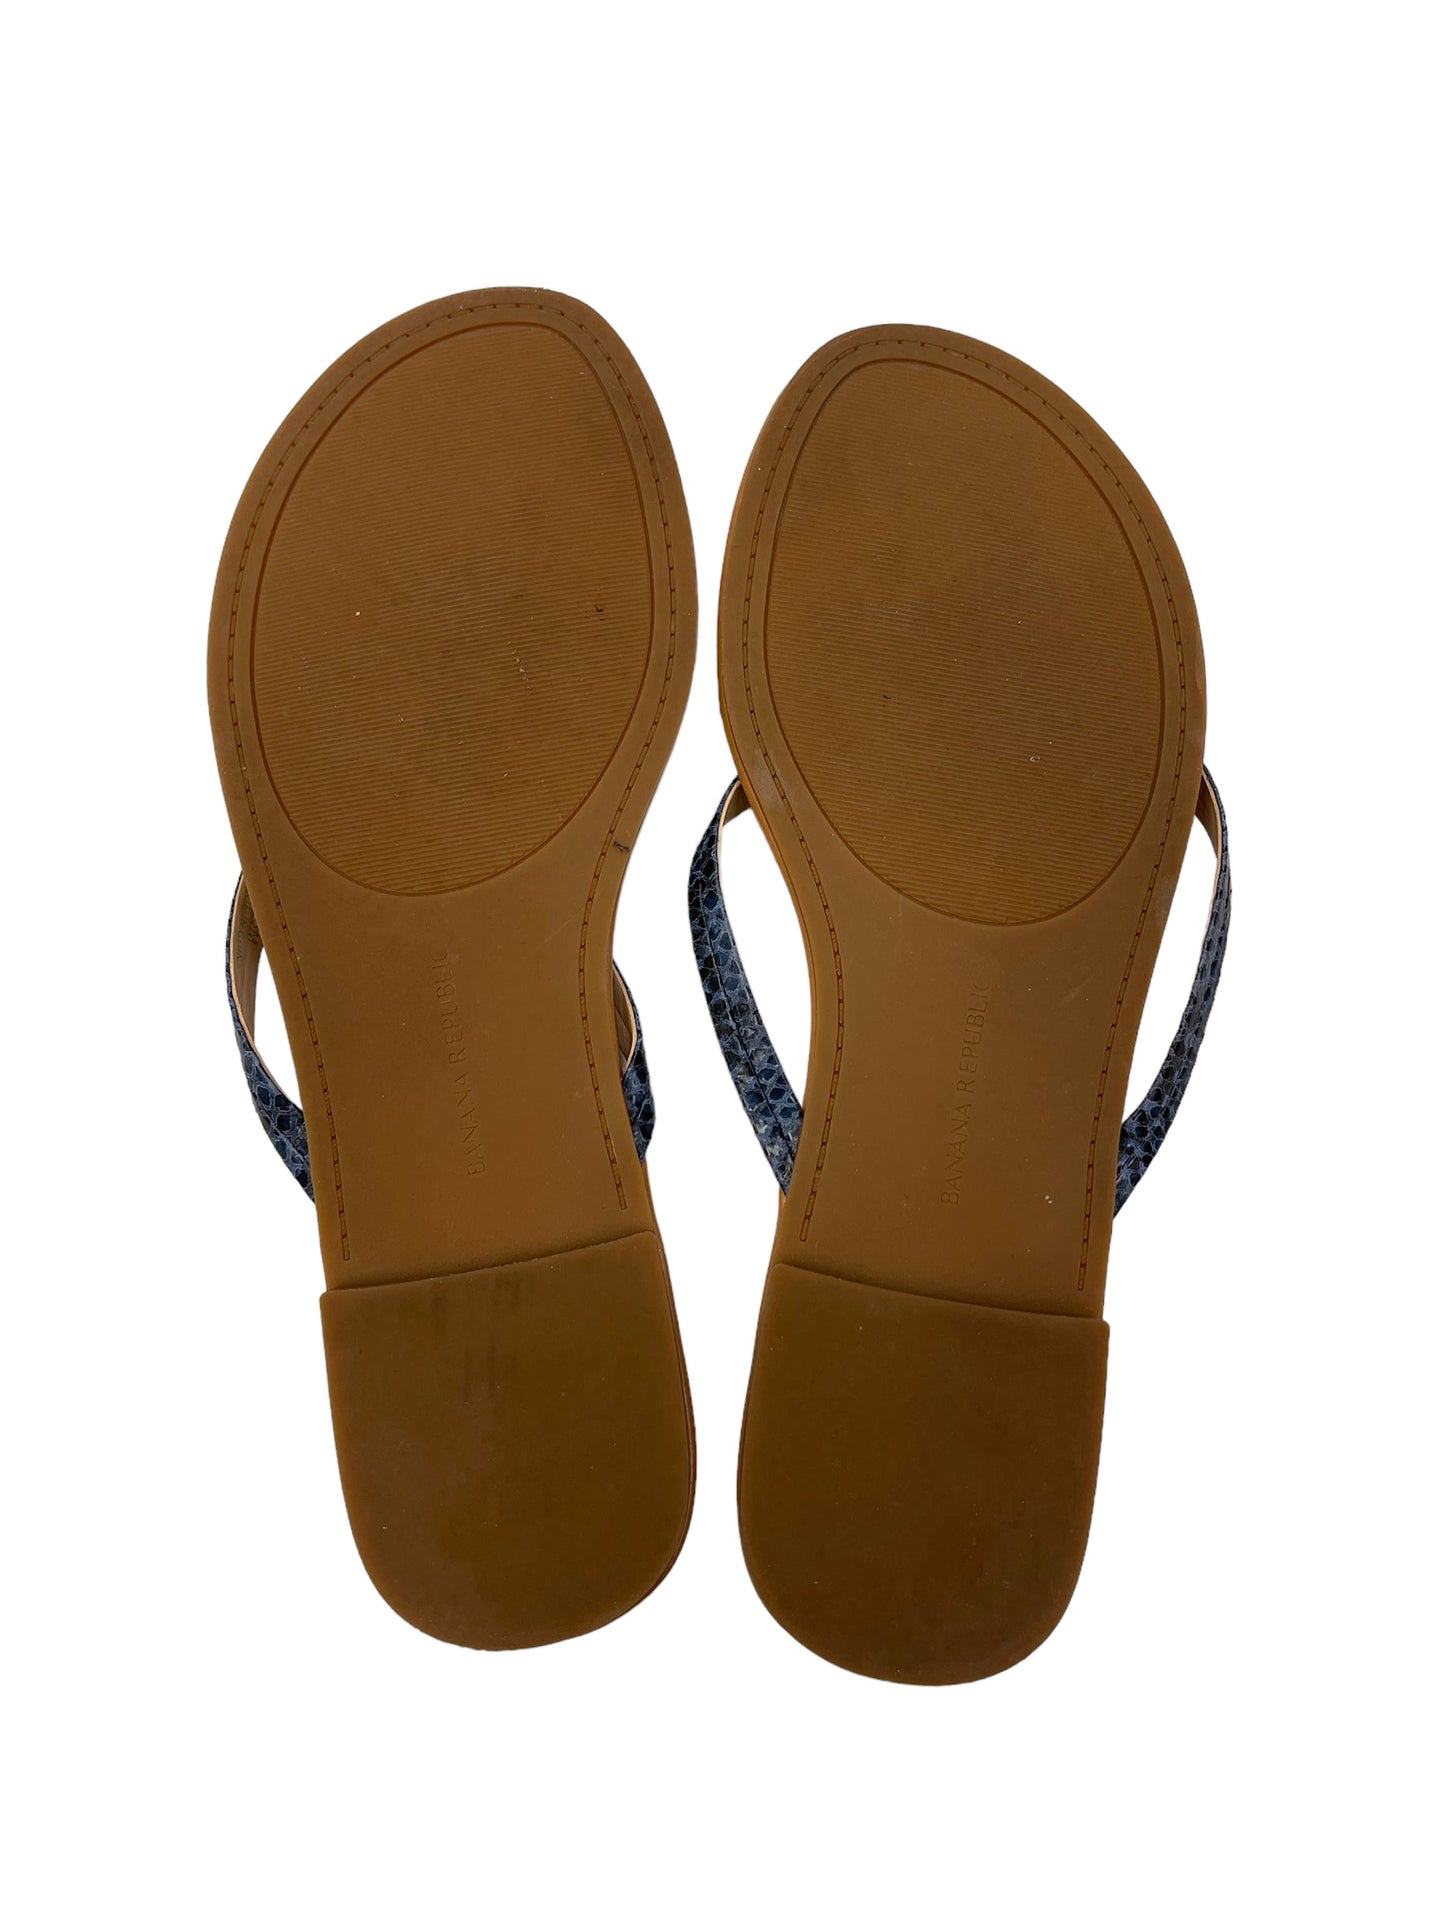 Sandals Flip Flops By Banana Republic  Size: 8